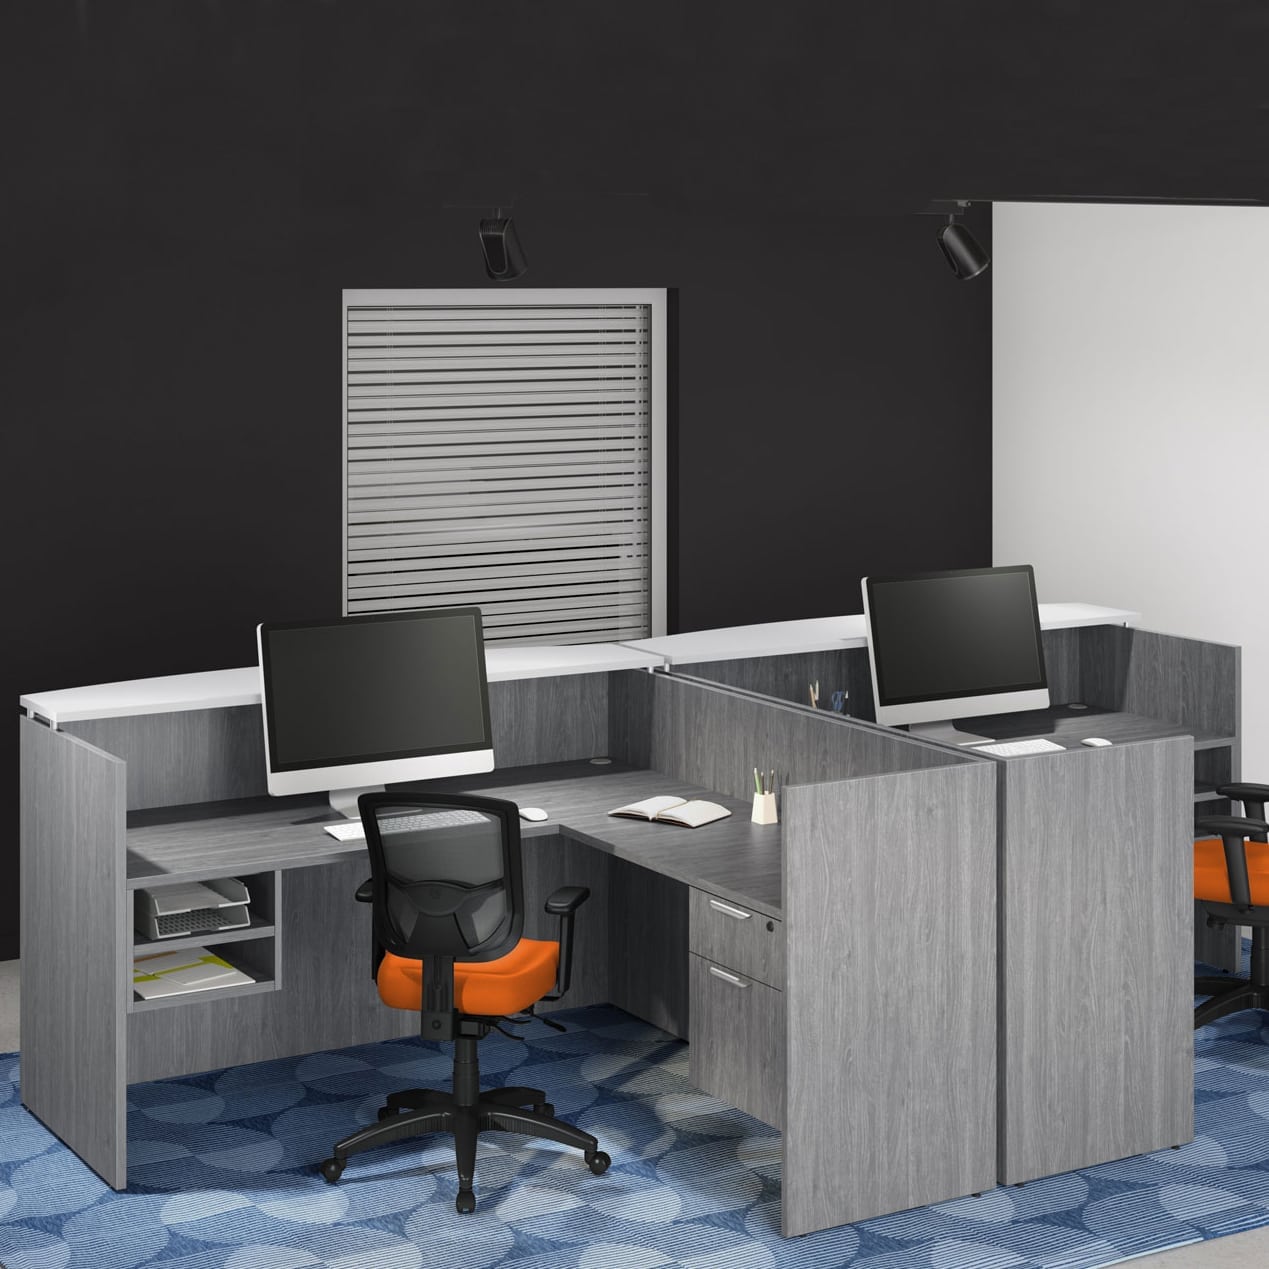 Double Reception Desk Station - Affordable & Stylish - Office Furniture EZ